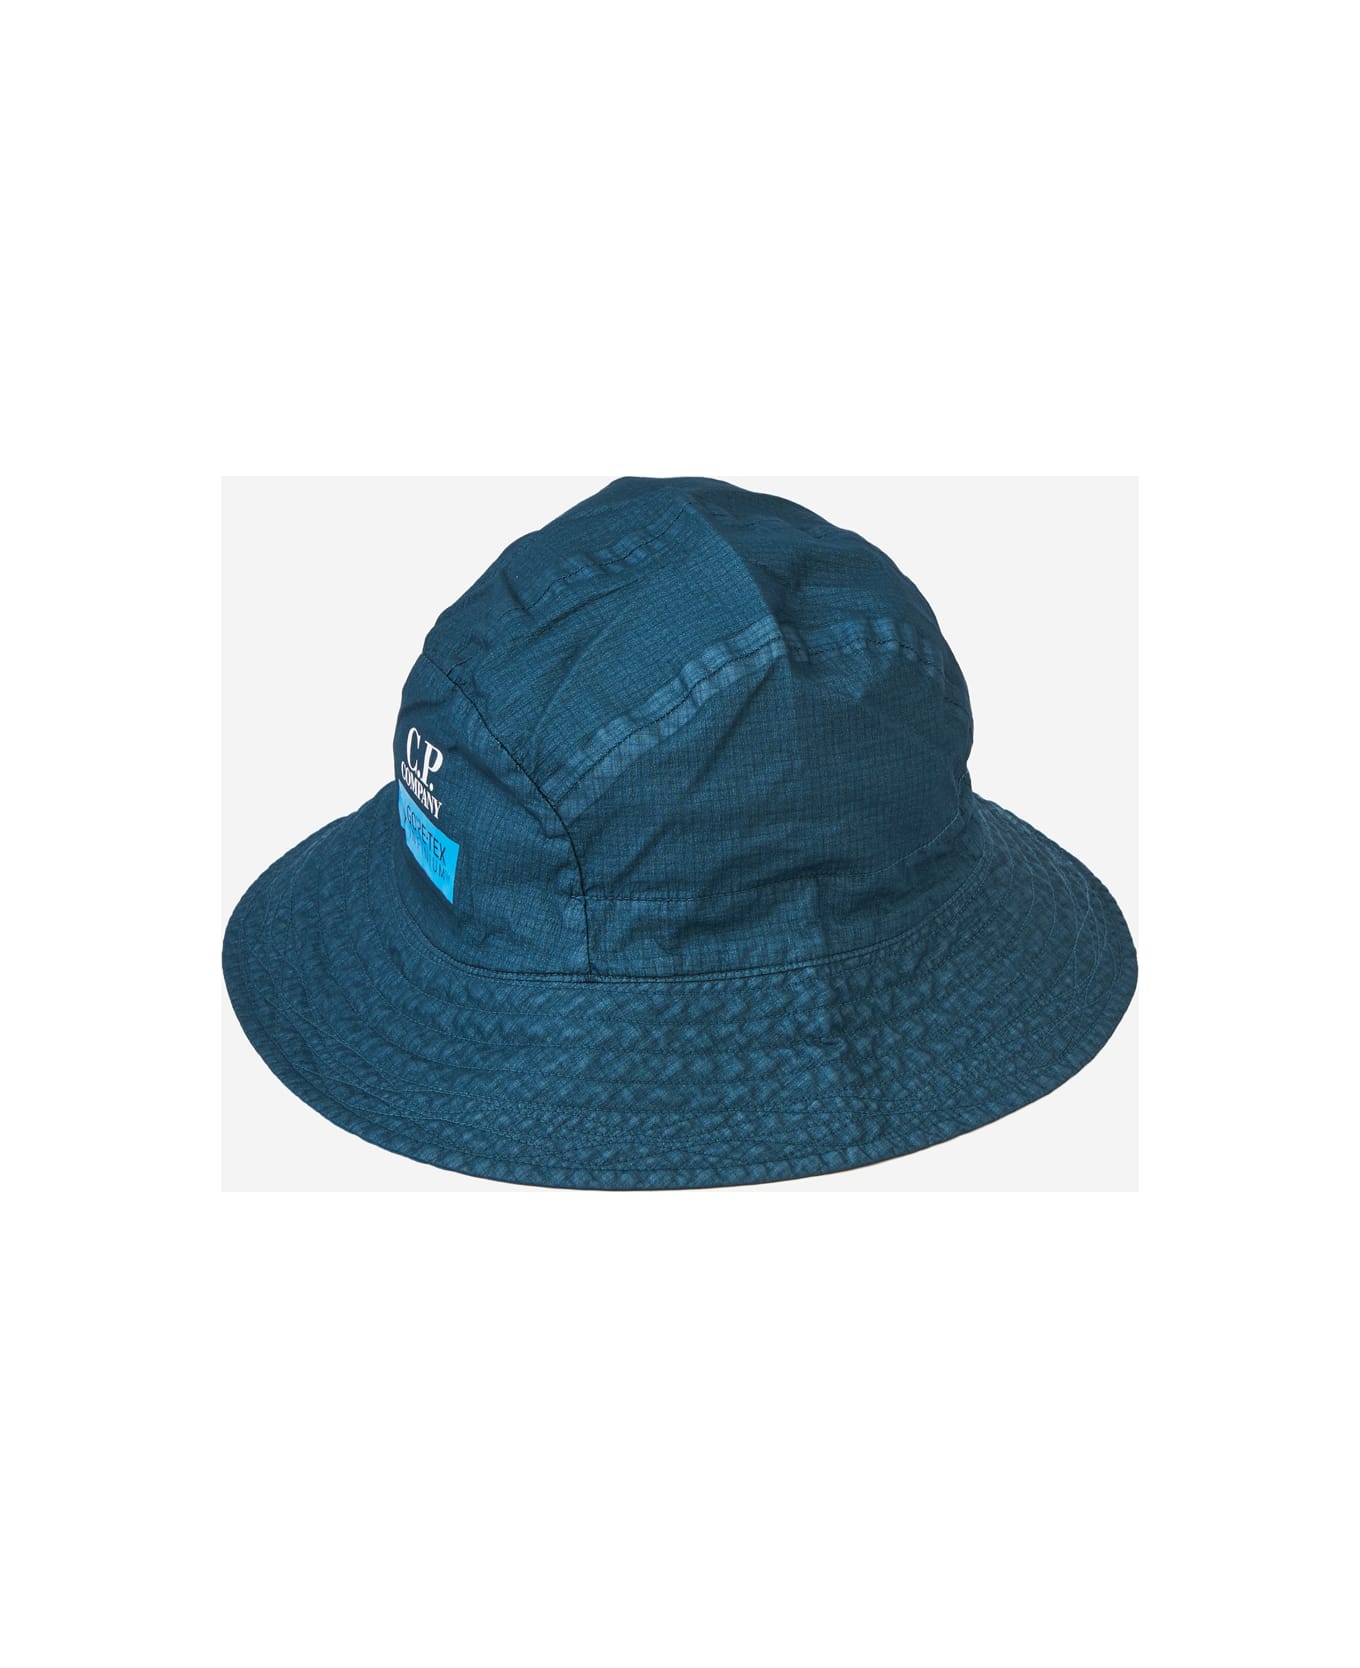 C.P. Company Hats - Ink Blue